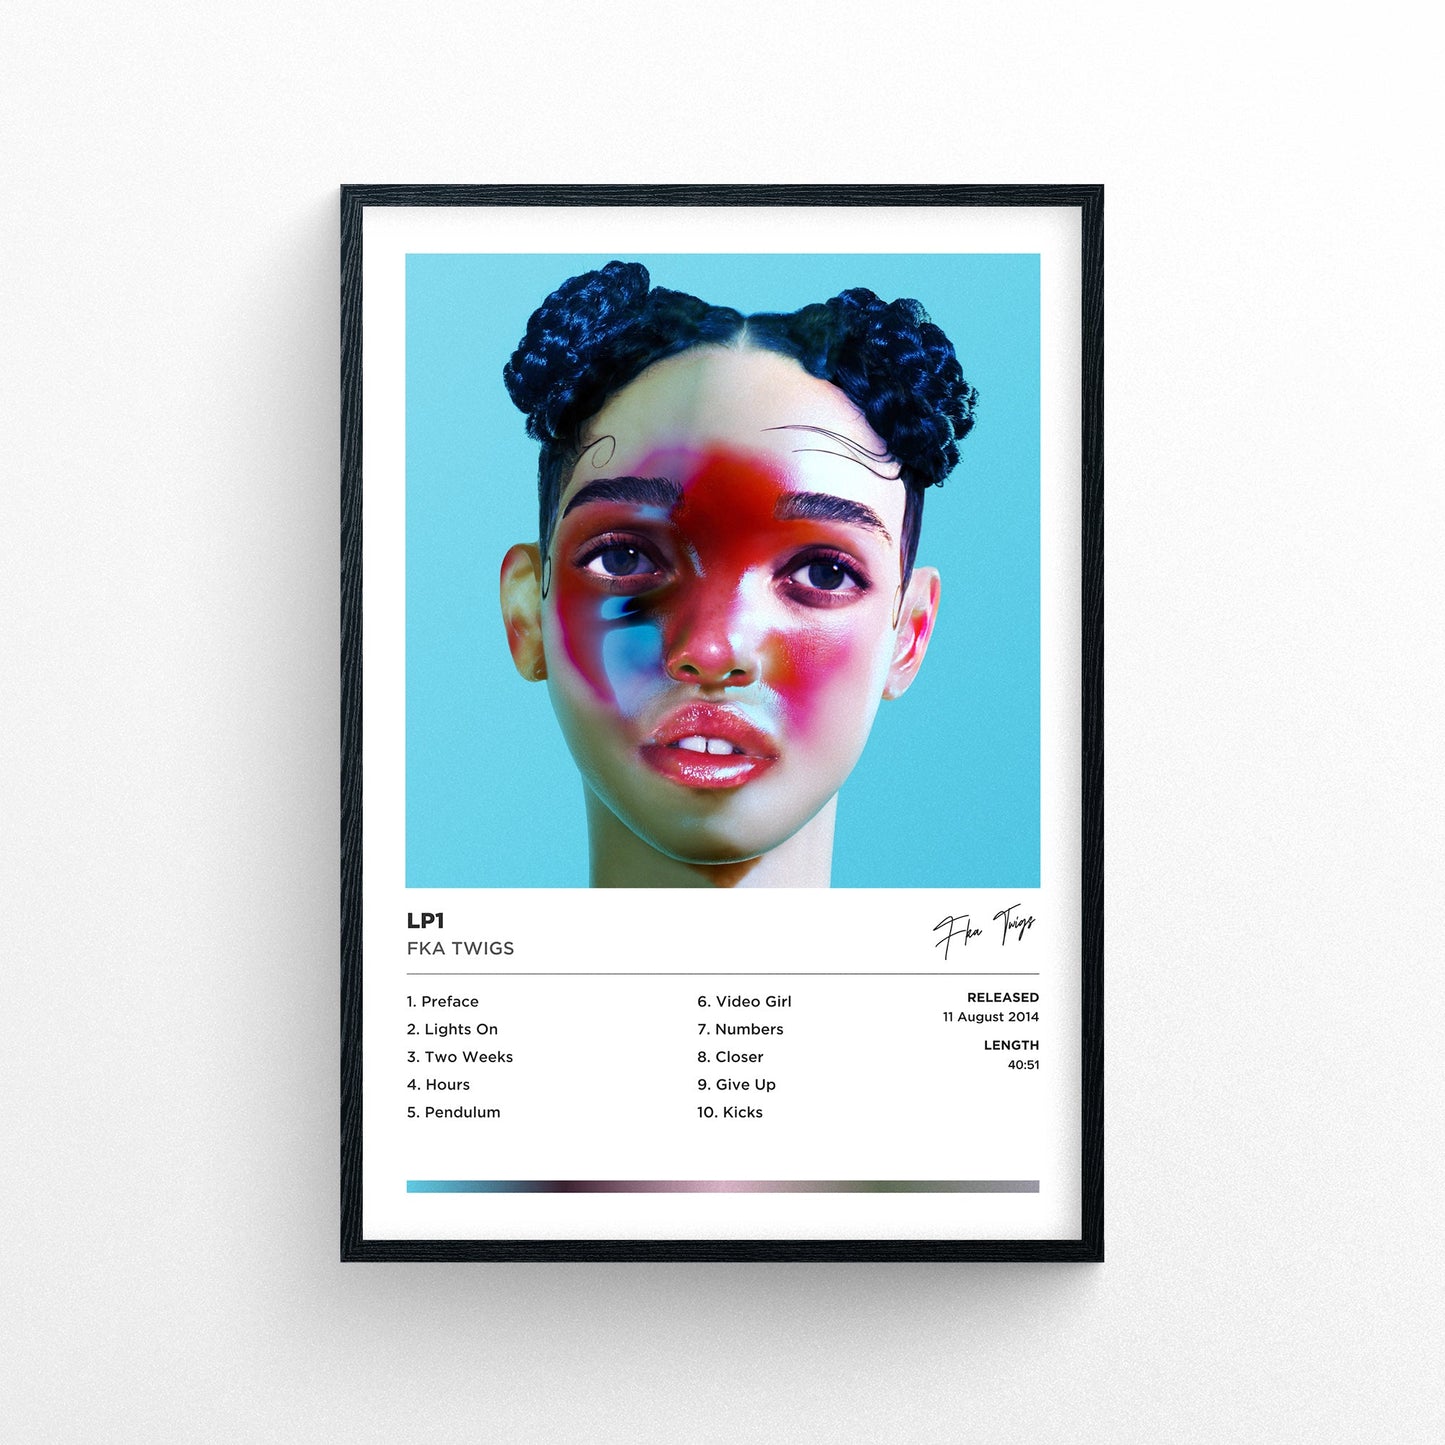 FKA Twigs - LP1 Framed Poster Print | Polaroid Style | Album Cover Artwork